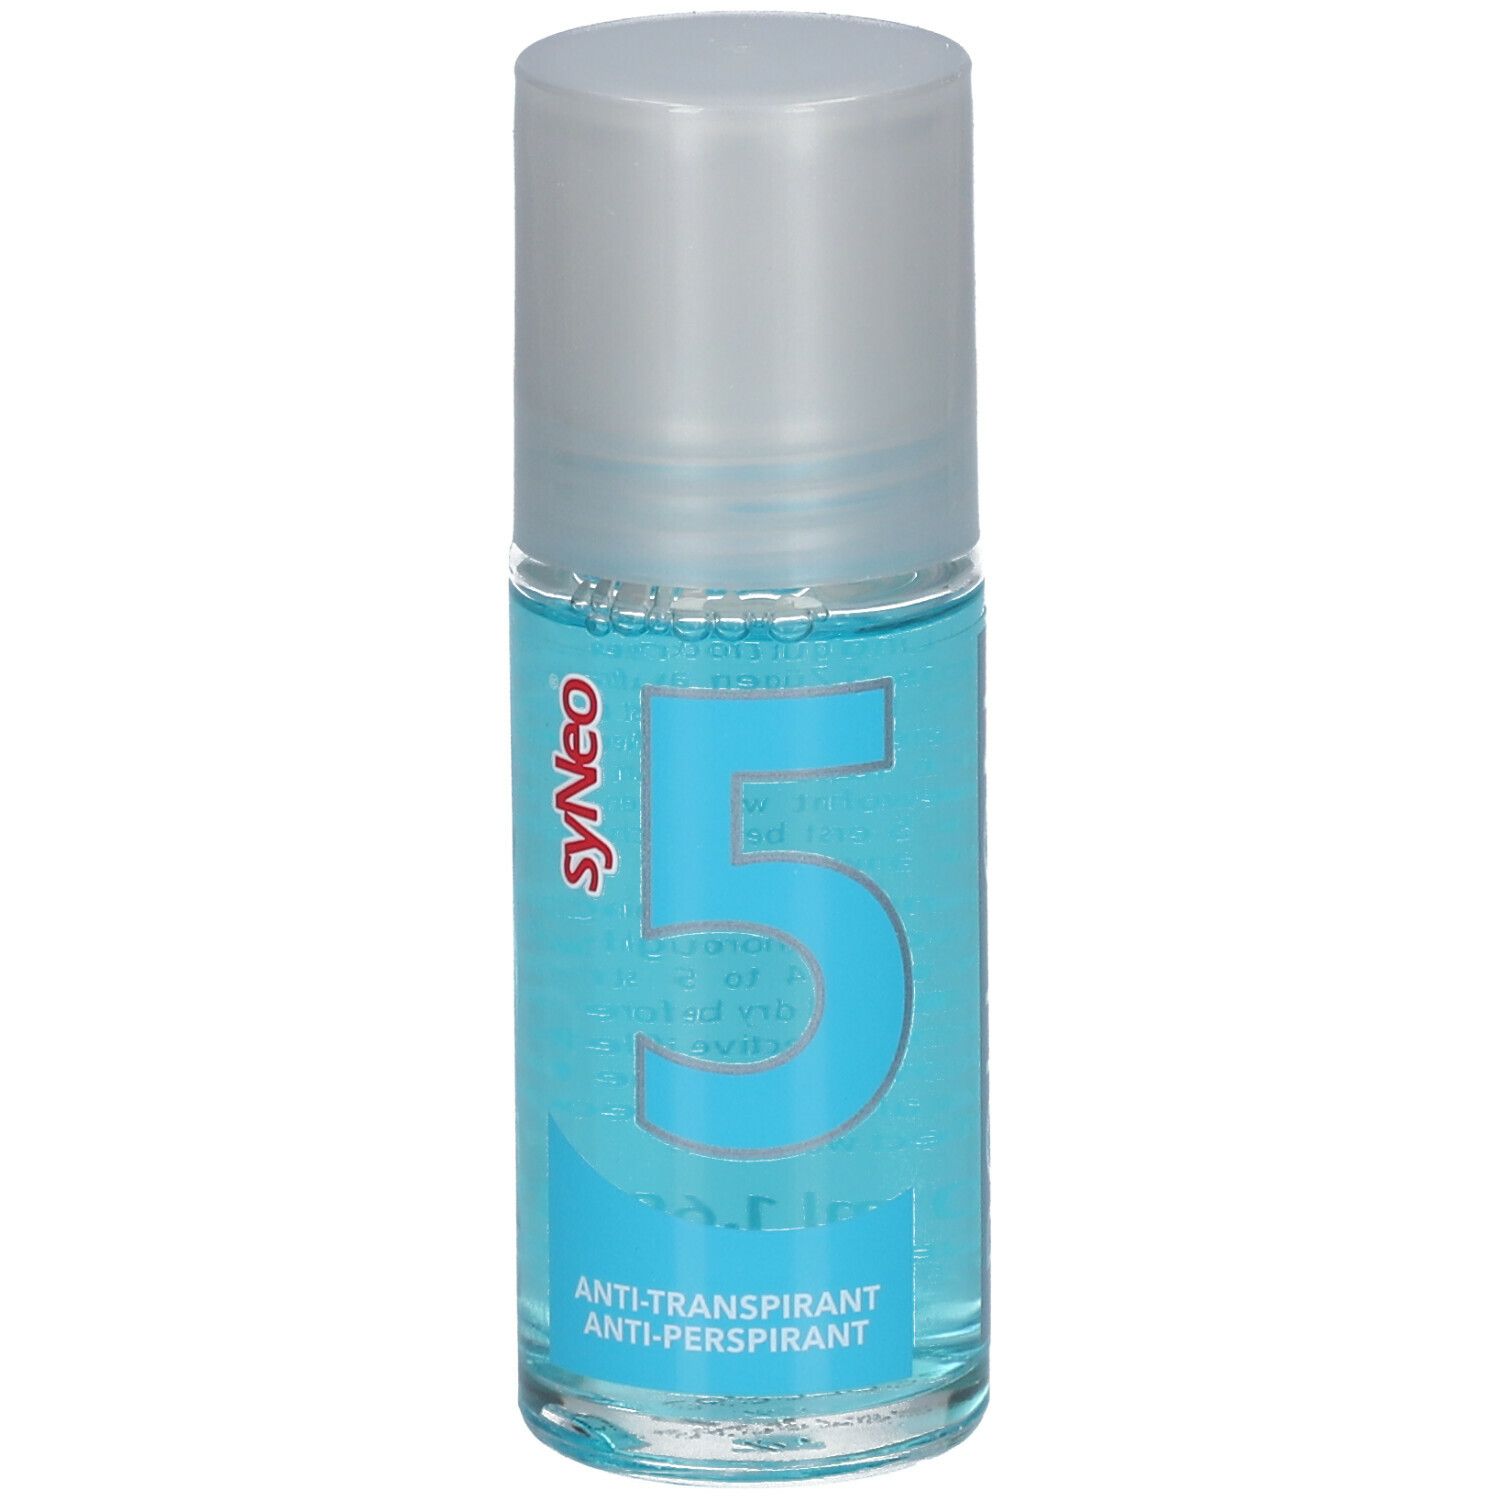 syNeo® 5 Roll-On Deo-Antitranspirant